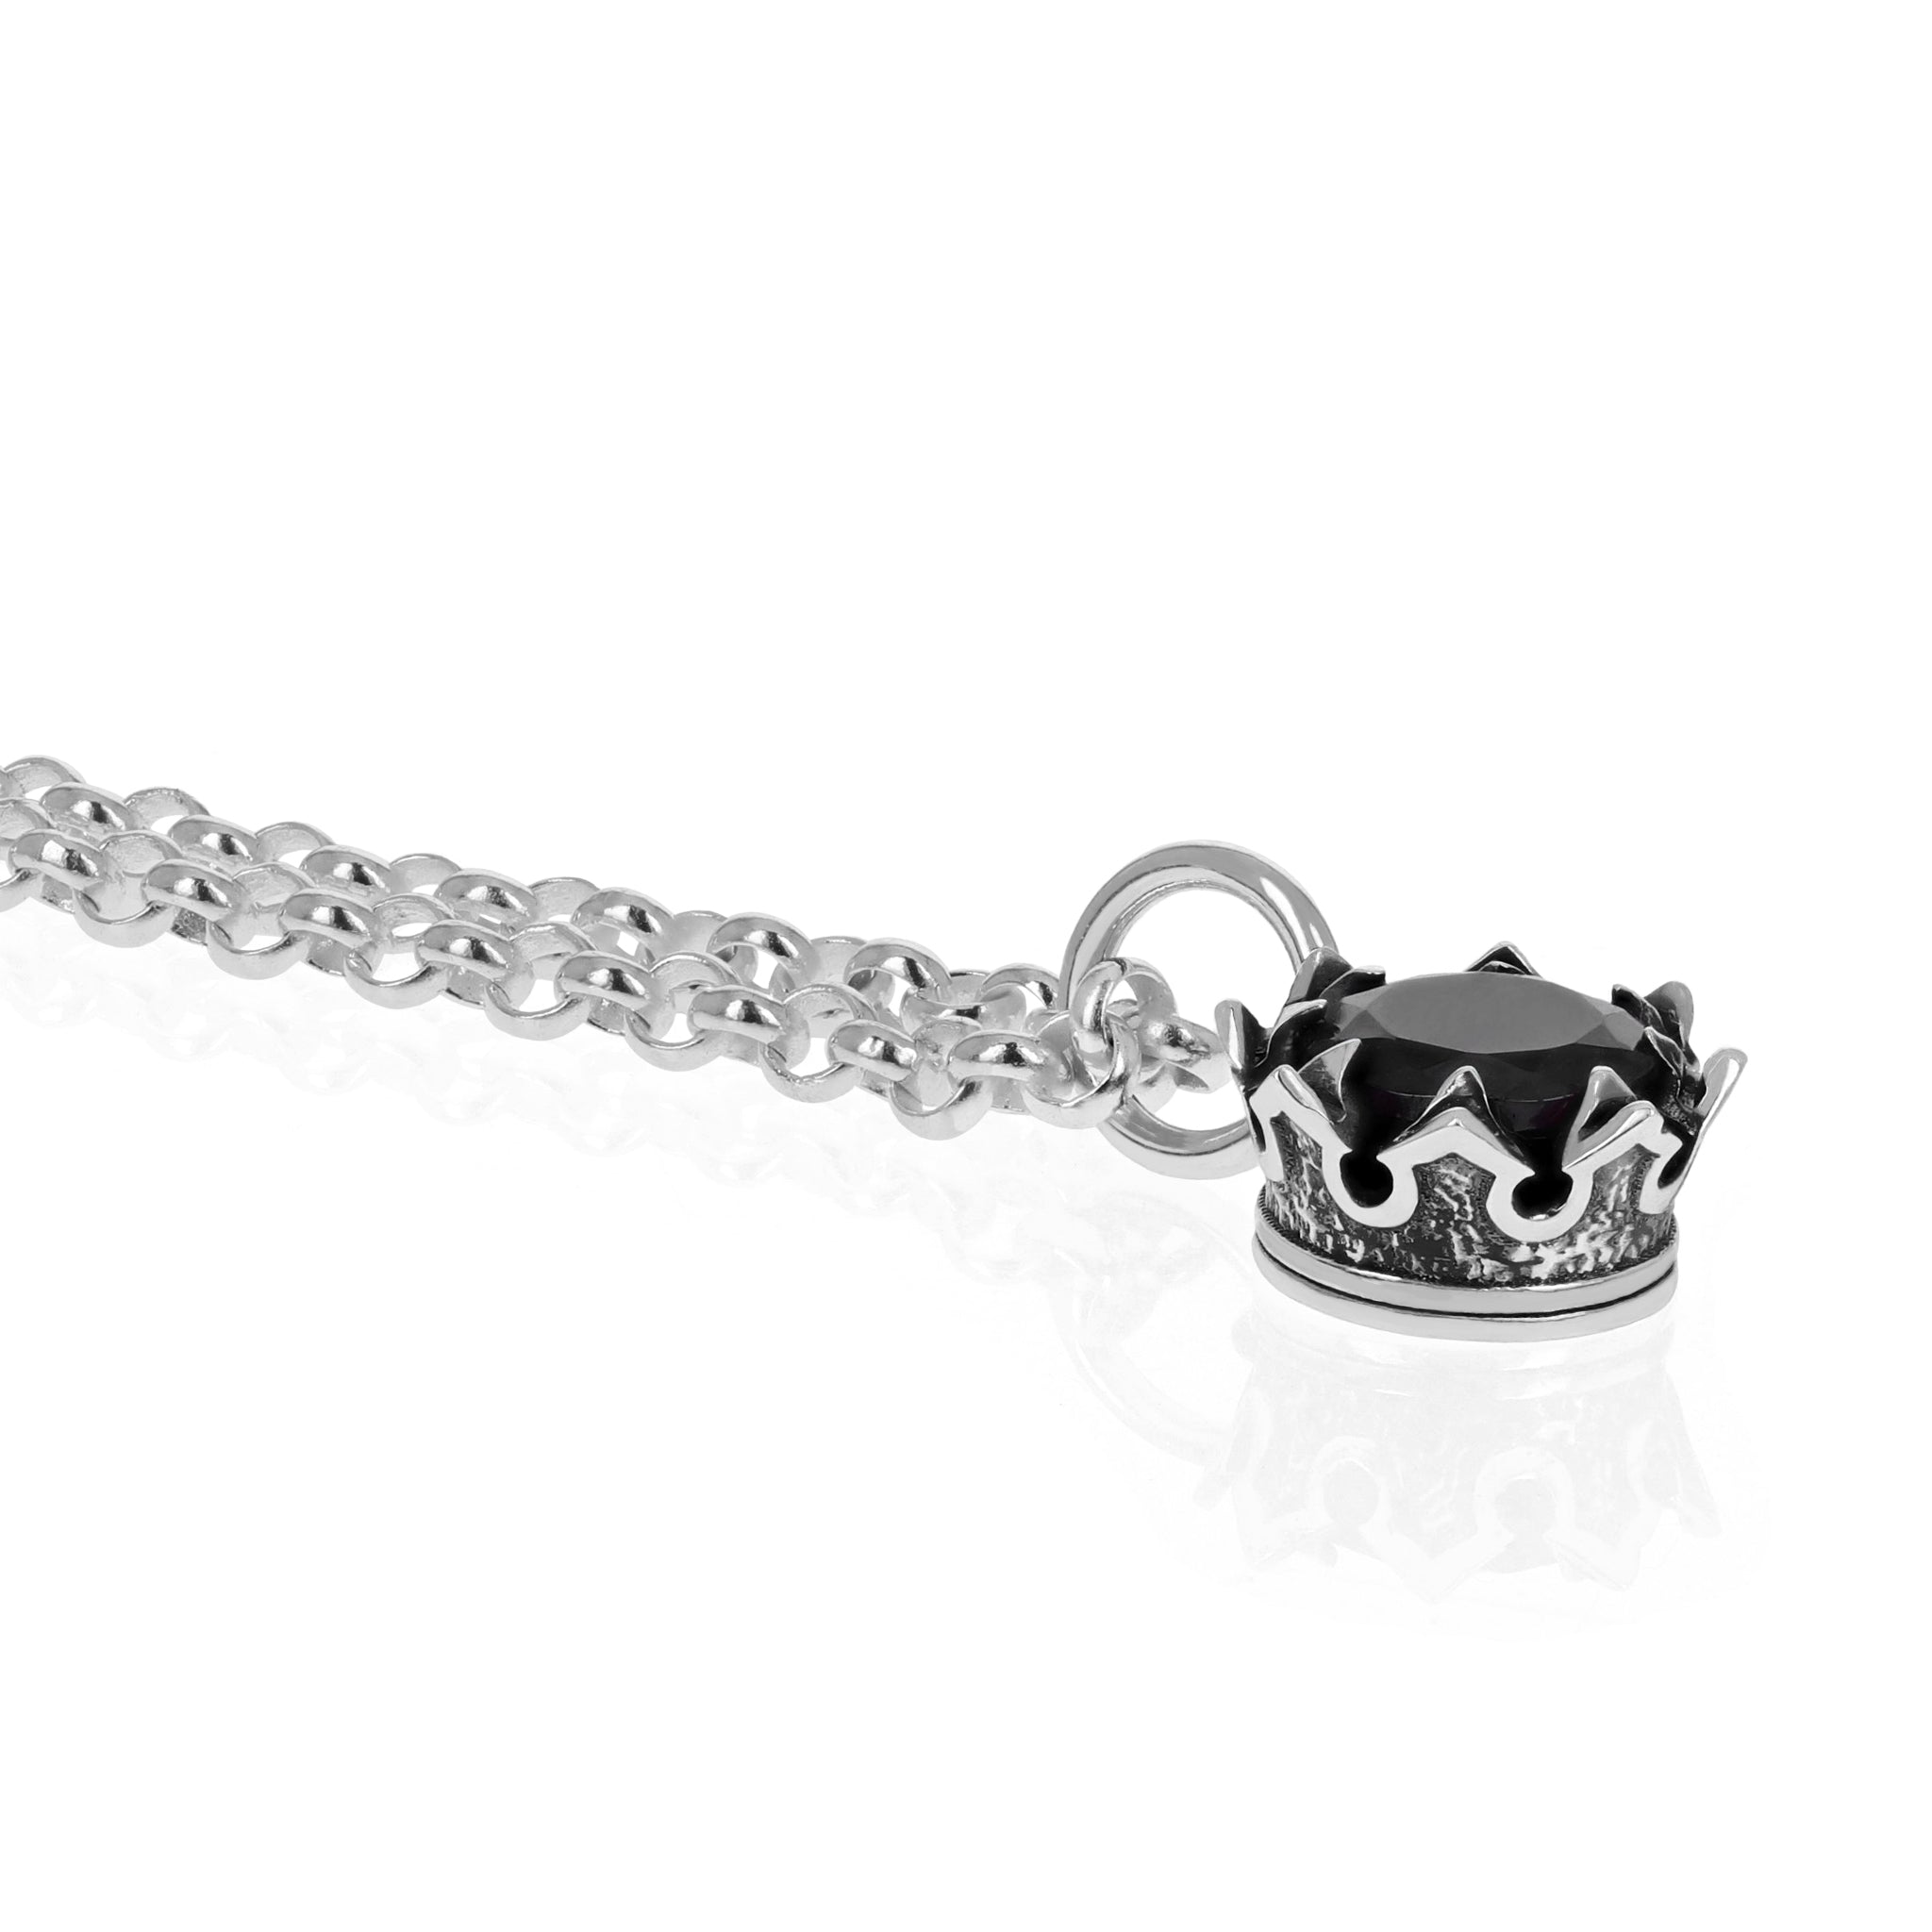 Crowned Garnet Pendant w/ Micro Rolo Chain – King Baby